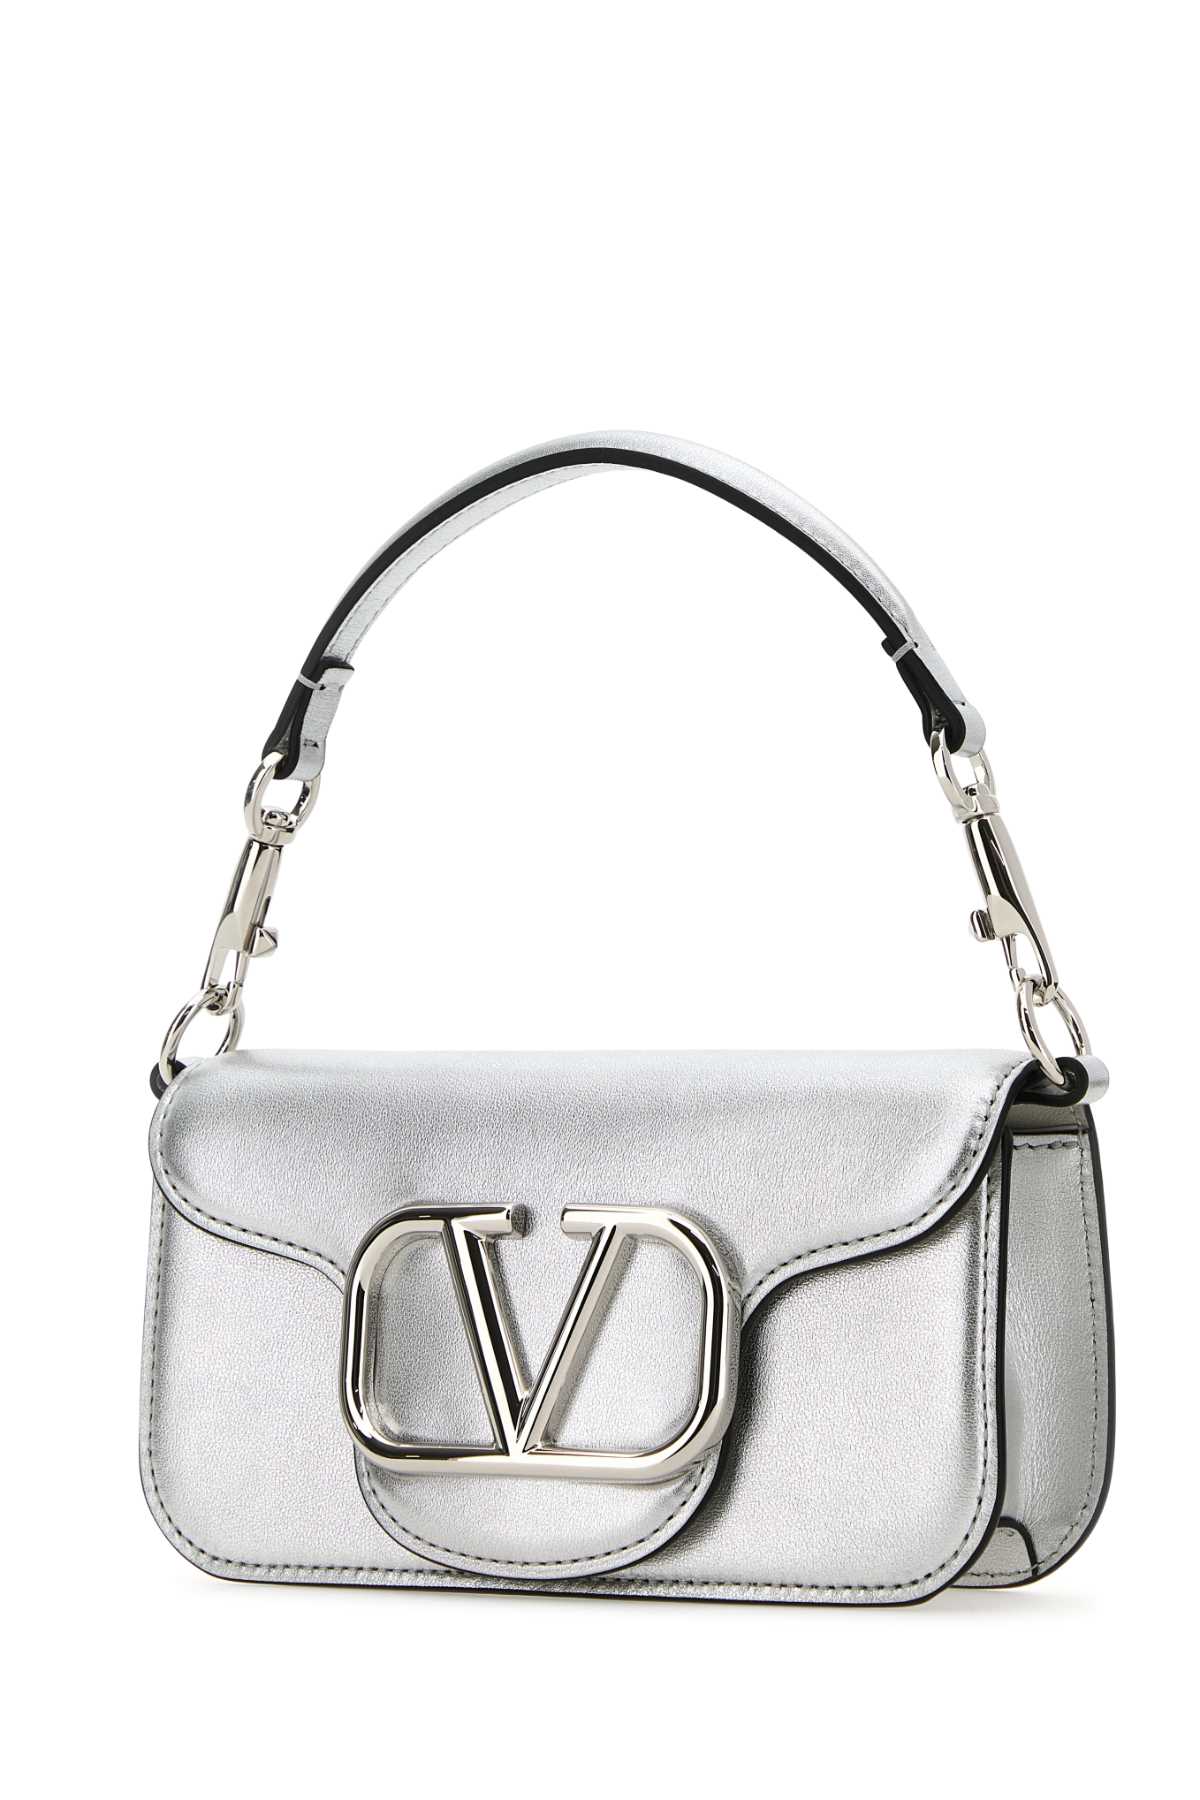 Valentino Garavani Silver Leather Locã² Handbag In Neutral